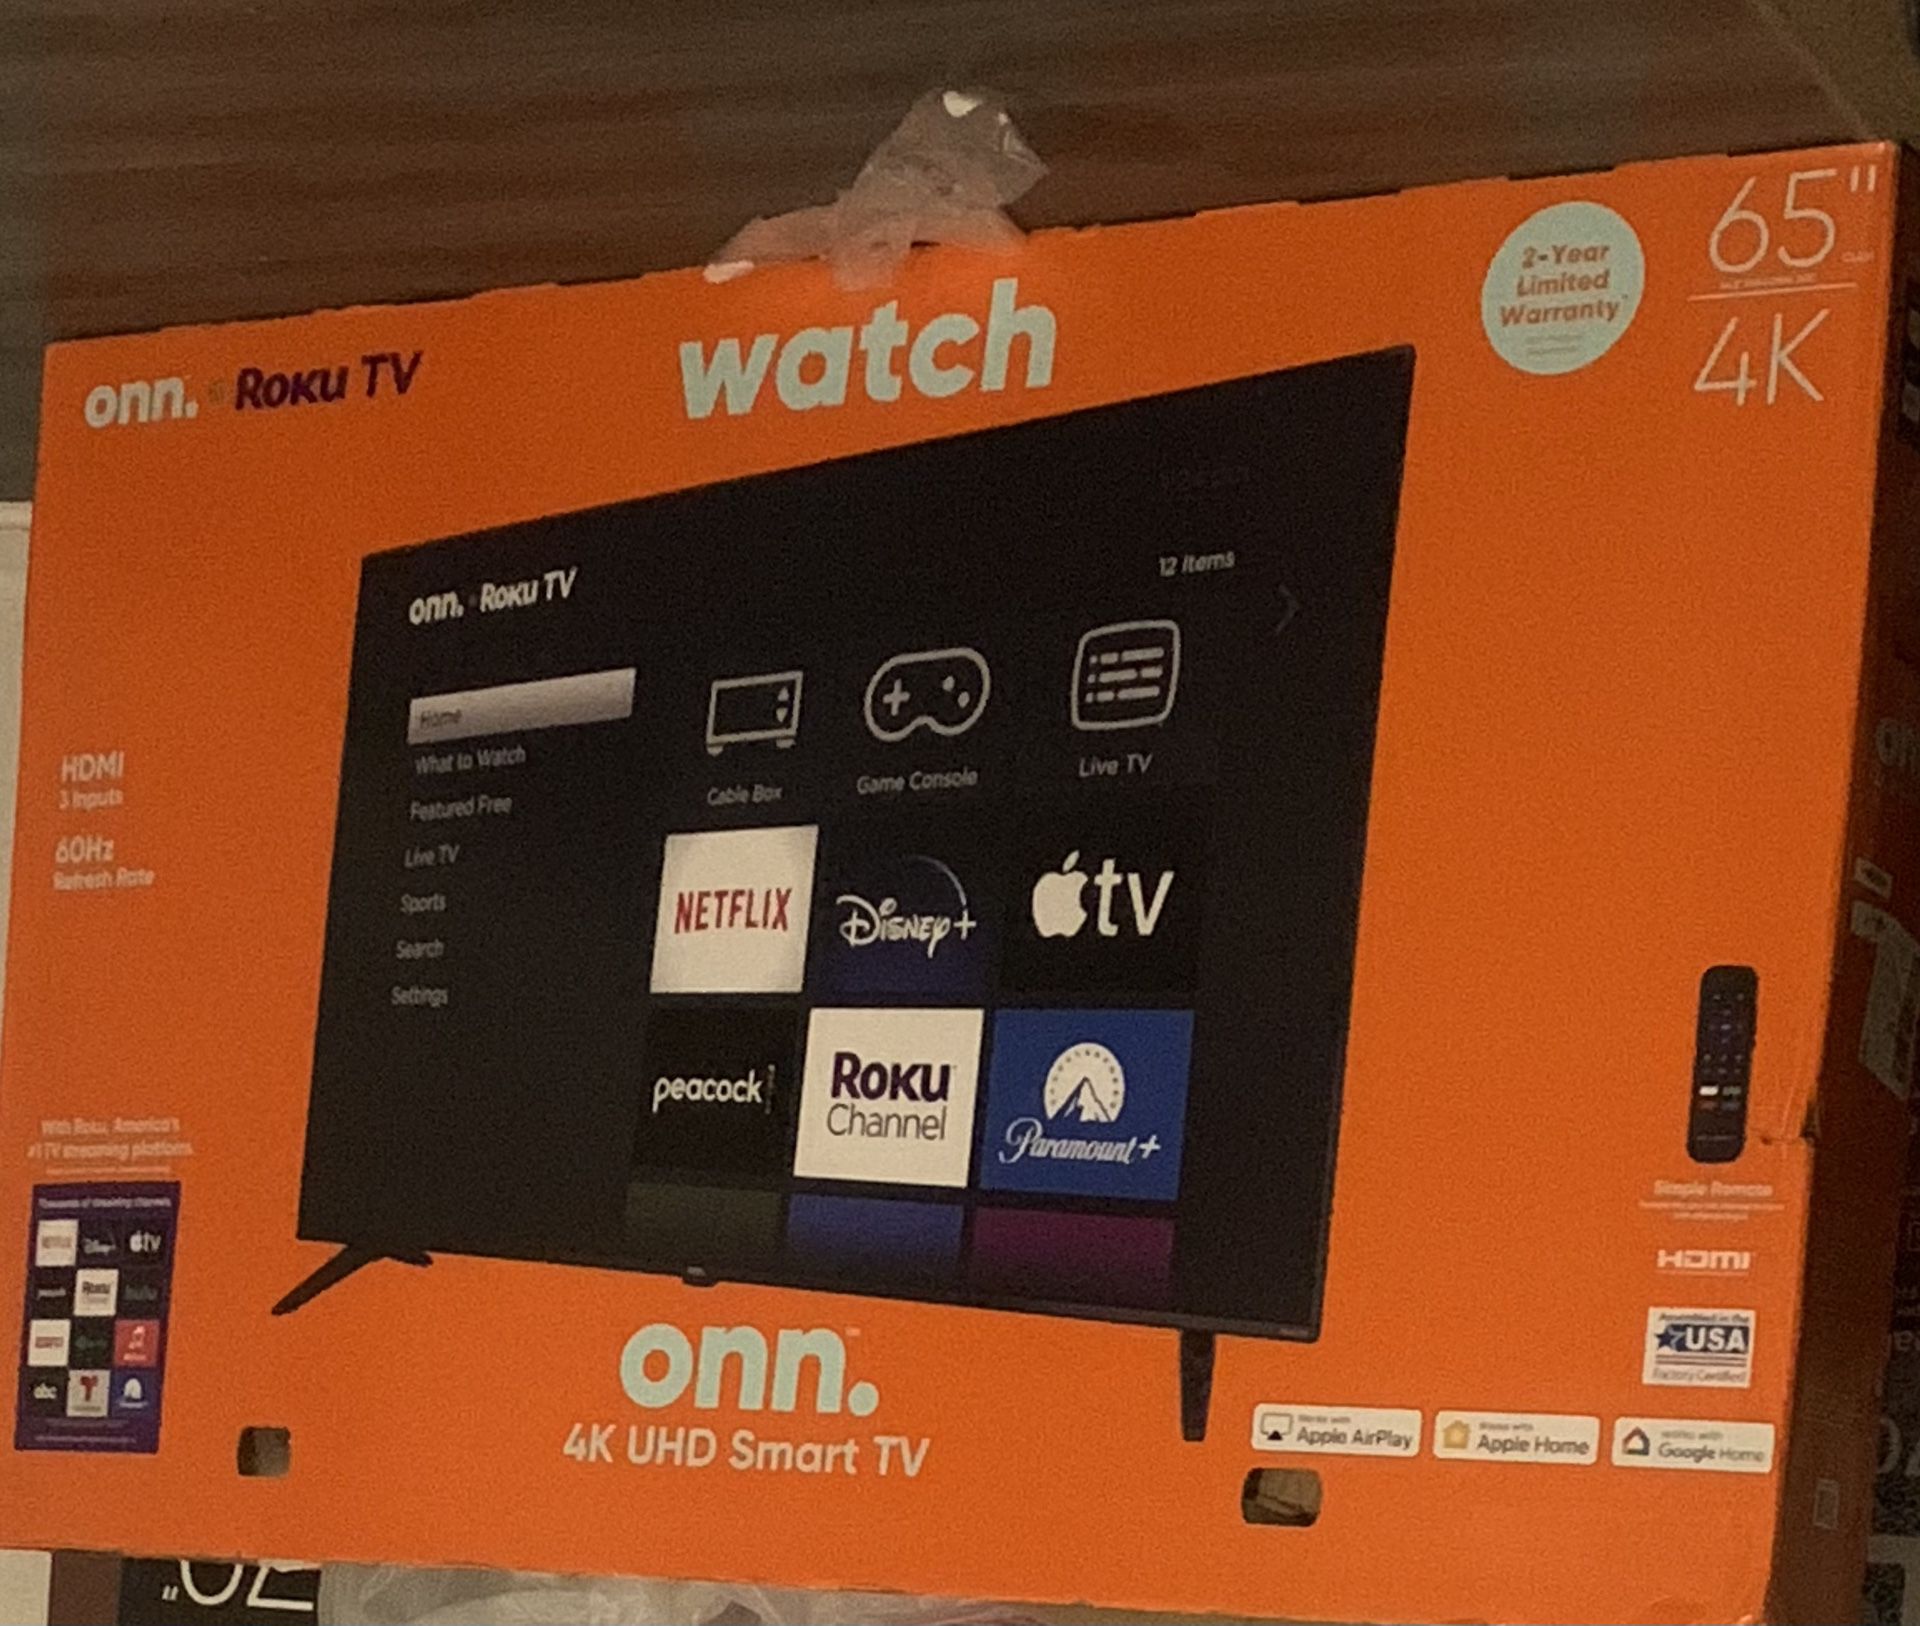 Onn. 4K UHD Smart TV (Roku) 